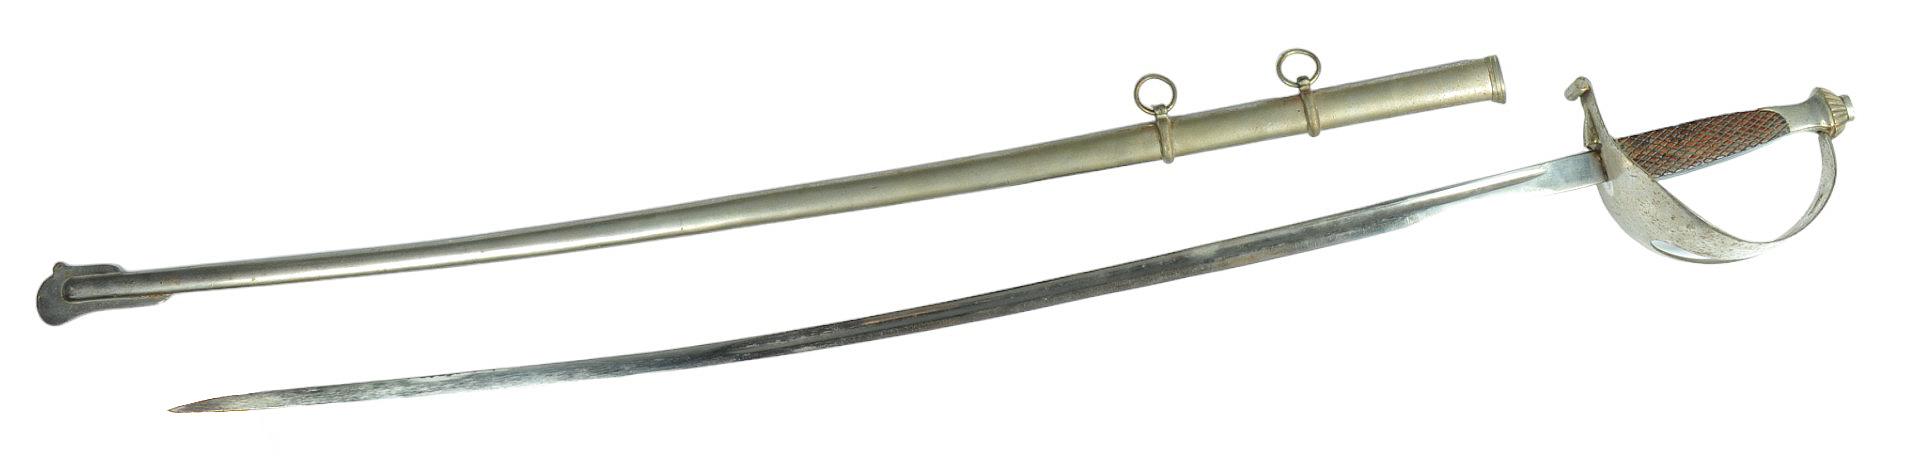 Italian Military WWI era M1887 Cavalry Sword (JMT)